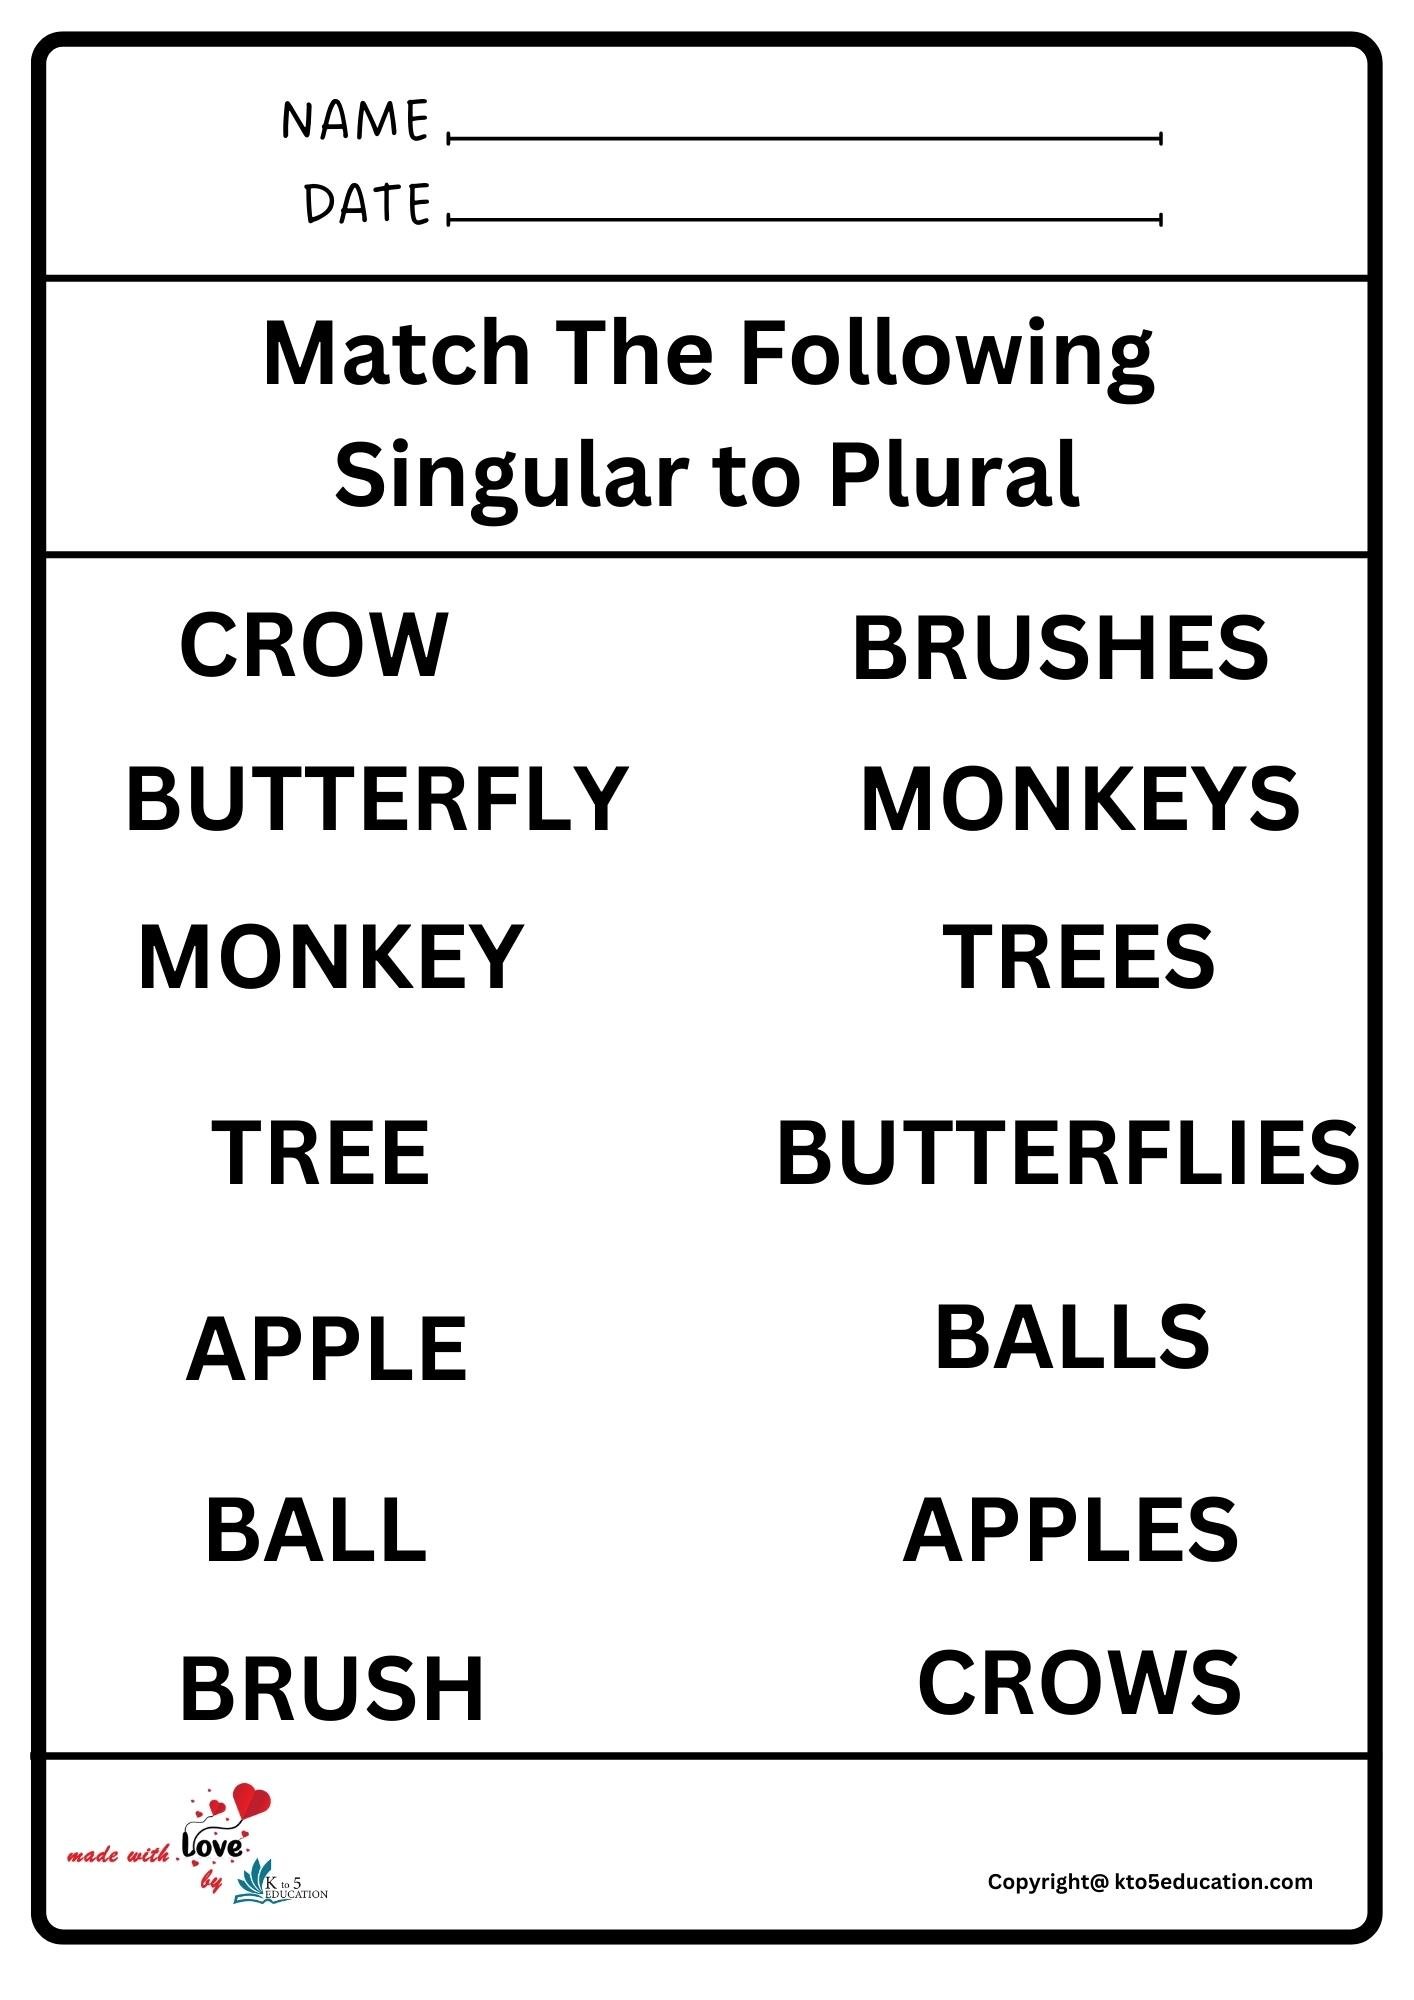 Match The Following Singular To Plural Worksheet